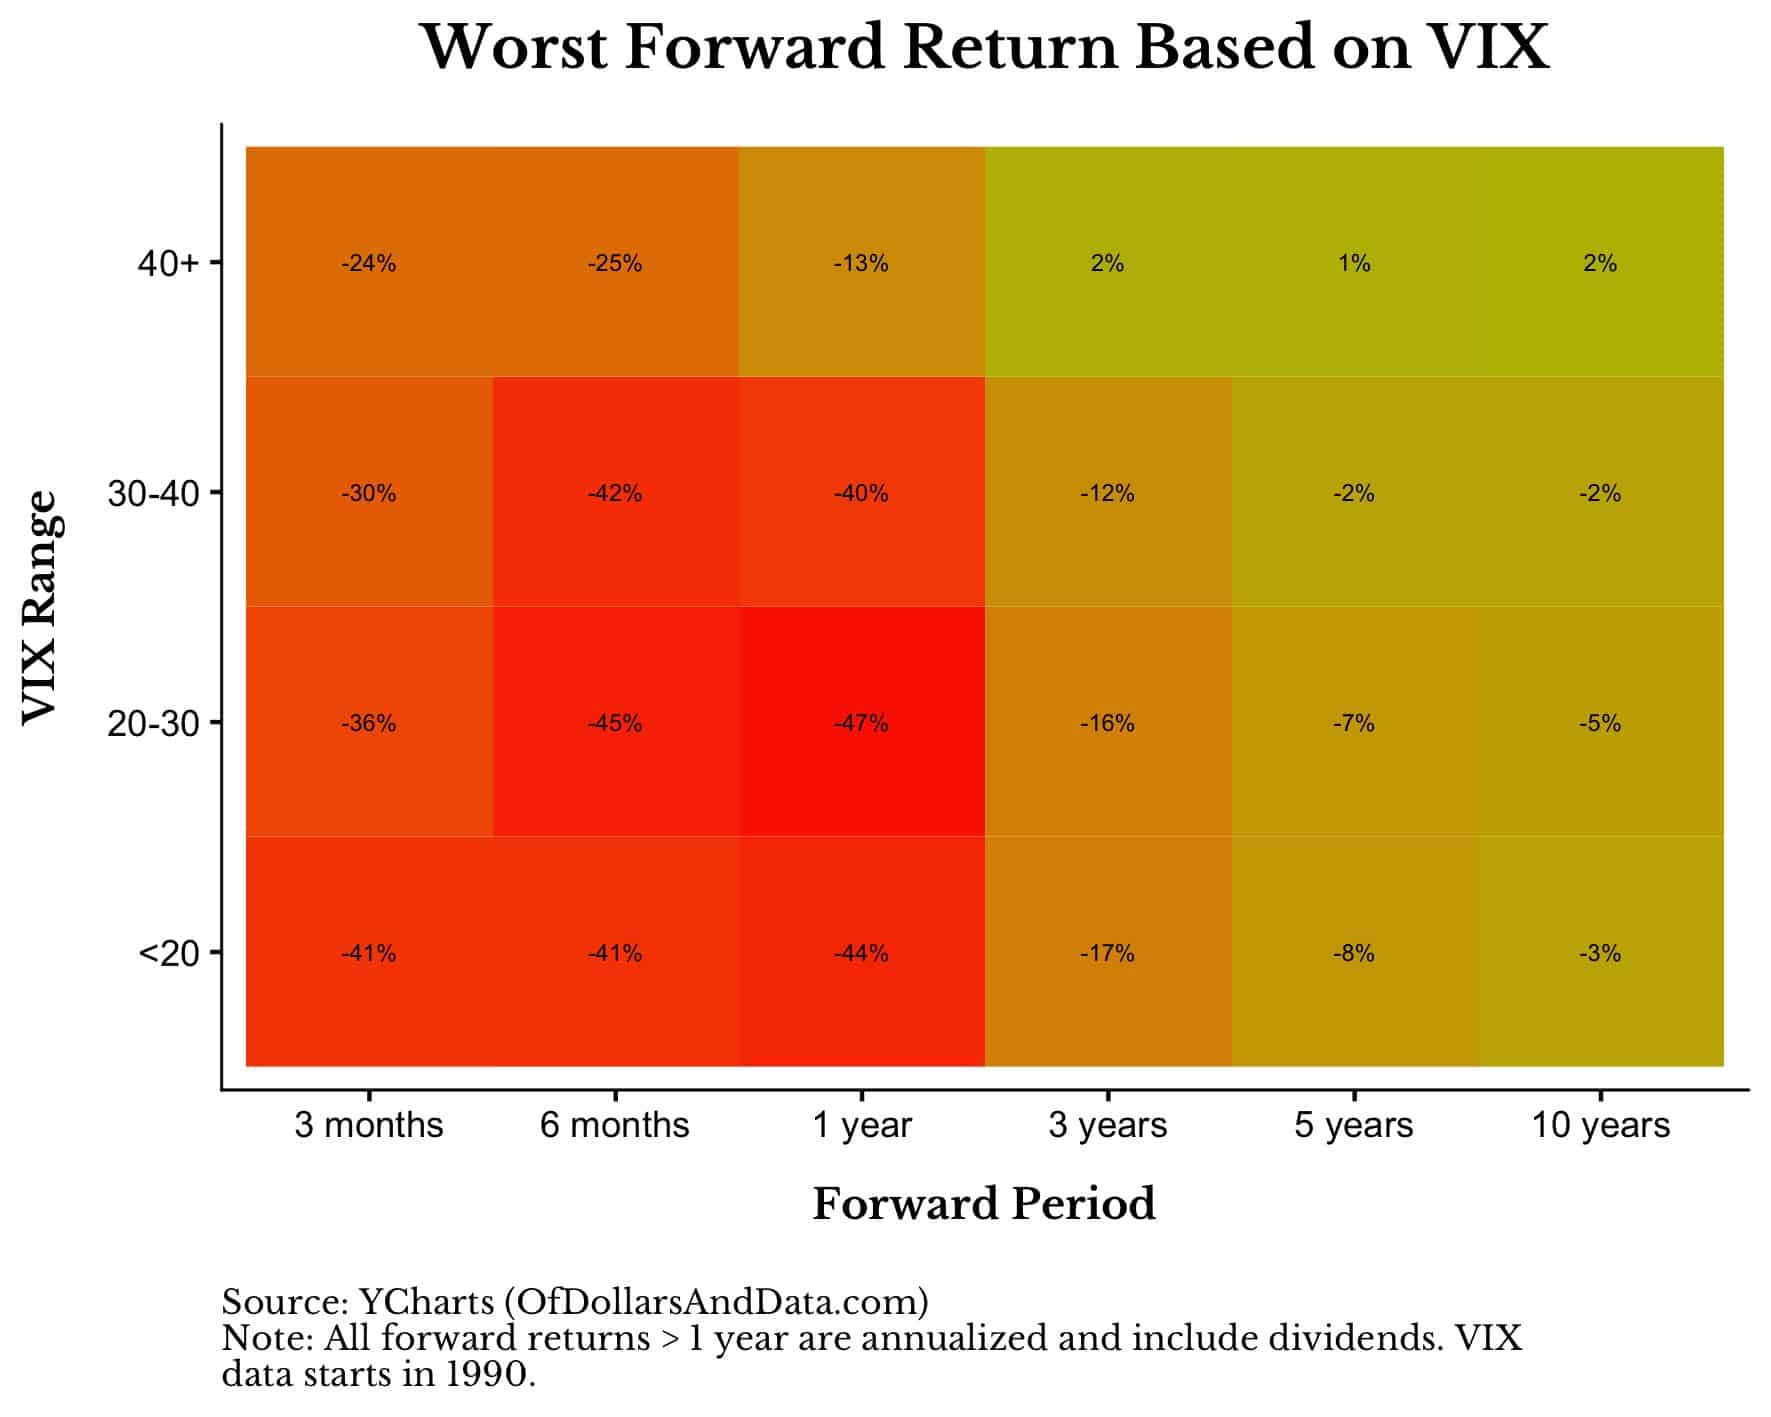 Worst forward return based on VIX range.